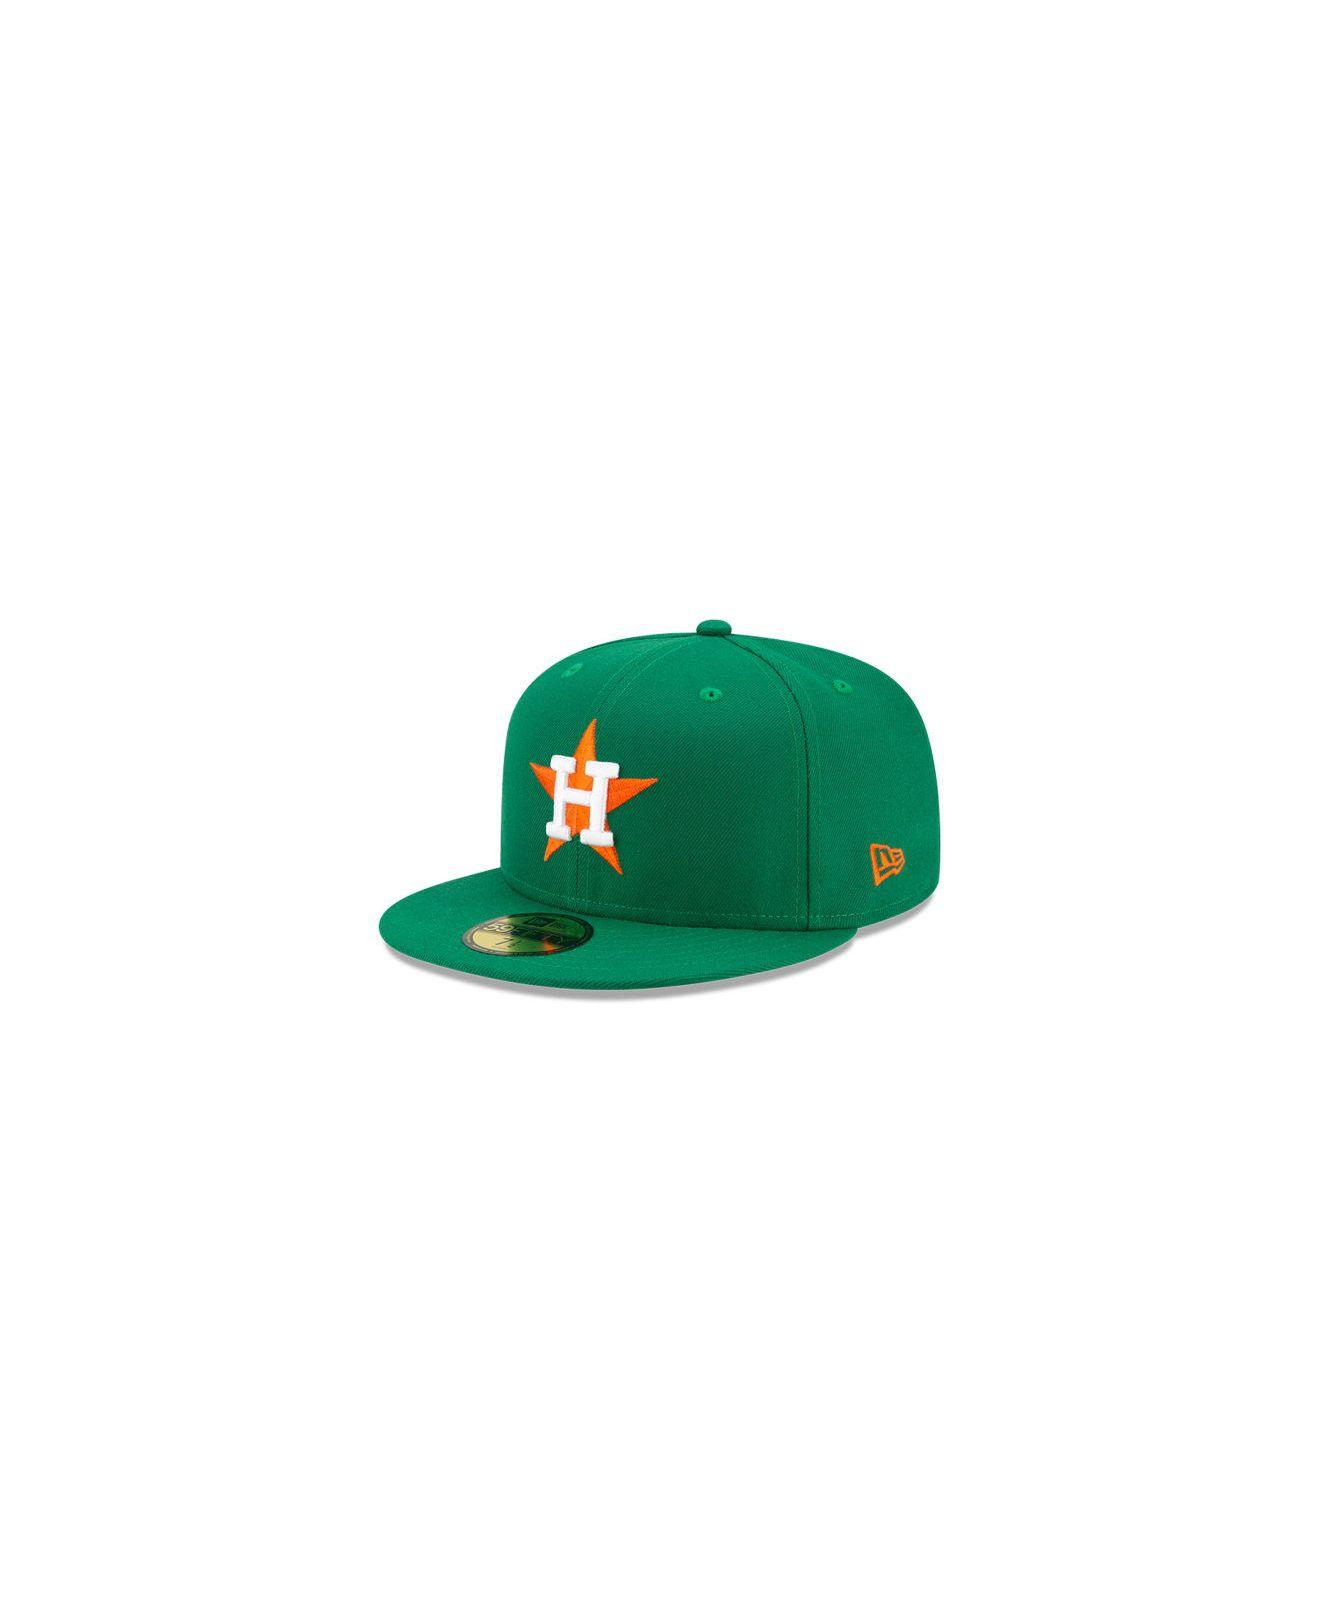 KTZ Houston Astros Kelly Green Color Uv 59fifty Cap for Men